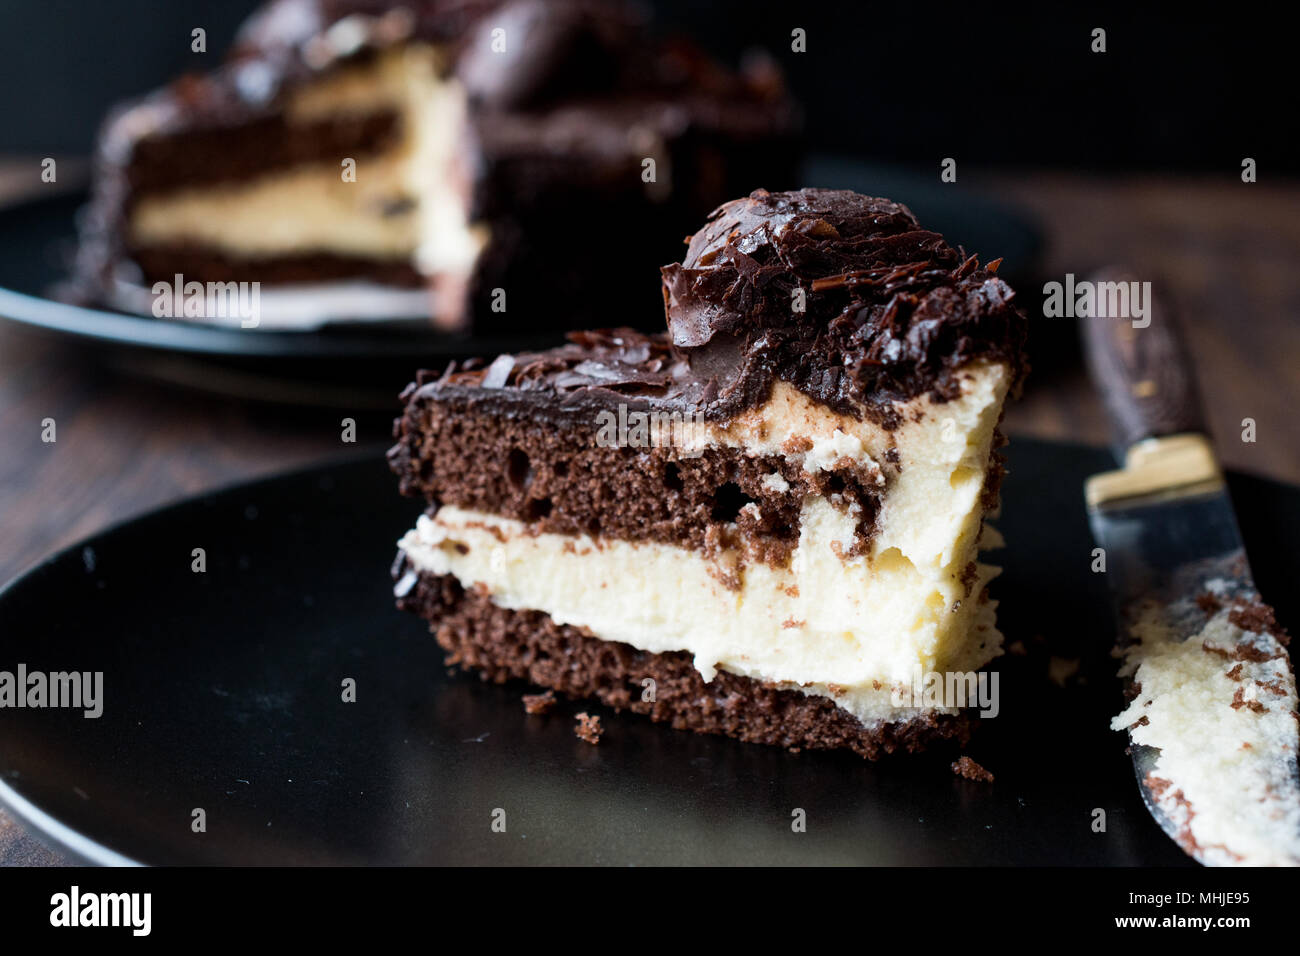 Chocolate Profiterole Cake on Black Plate. Dessert Concept. Stock Photo